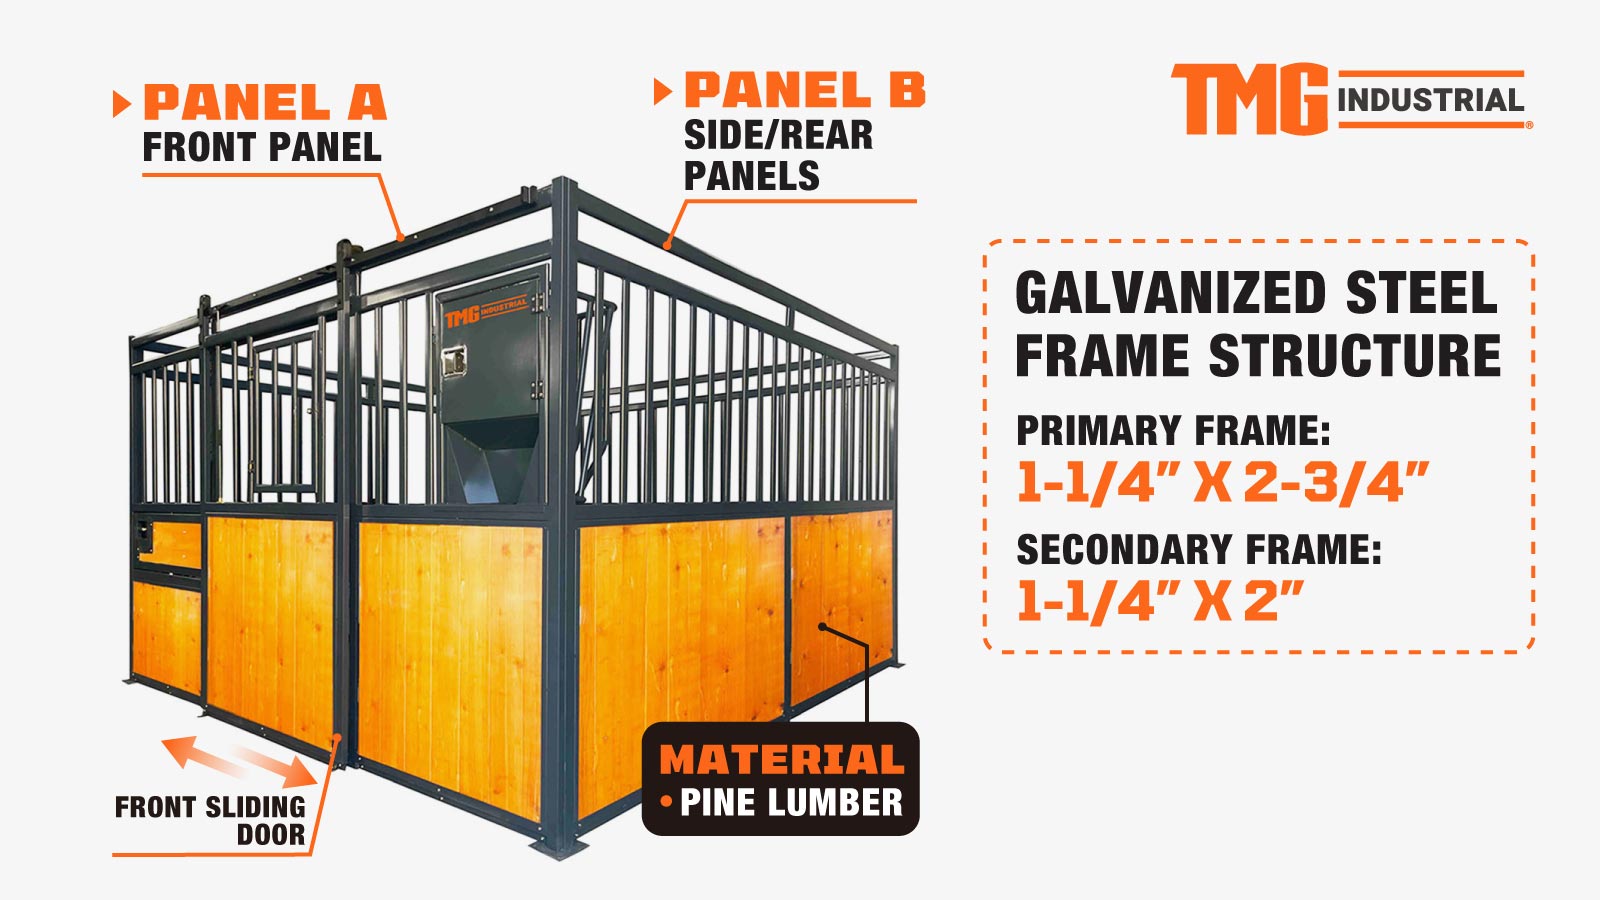 TMG Industrial 12' x 12' Horse Stall Set w/Pine Lumber Boards, Vertical Bar Top & Wood-Filled Bottom, Window/Feeder Opening, Front Sliding Door, TMG-FHS12-description-image